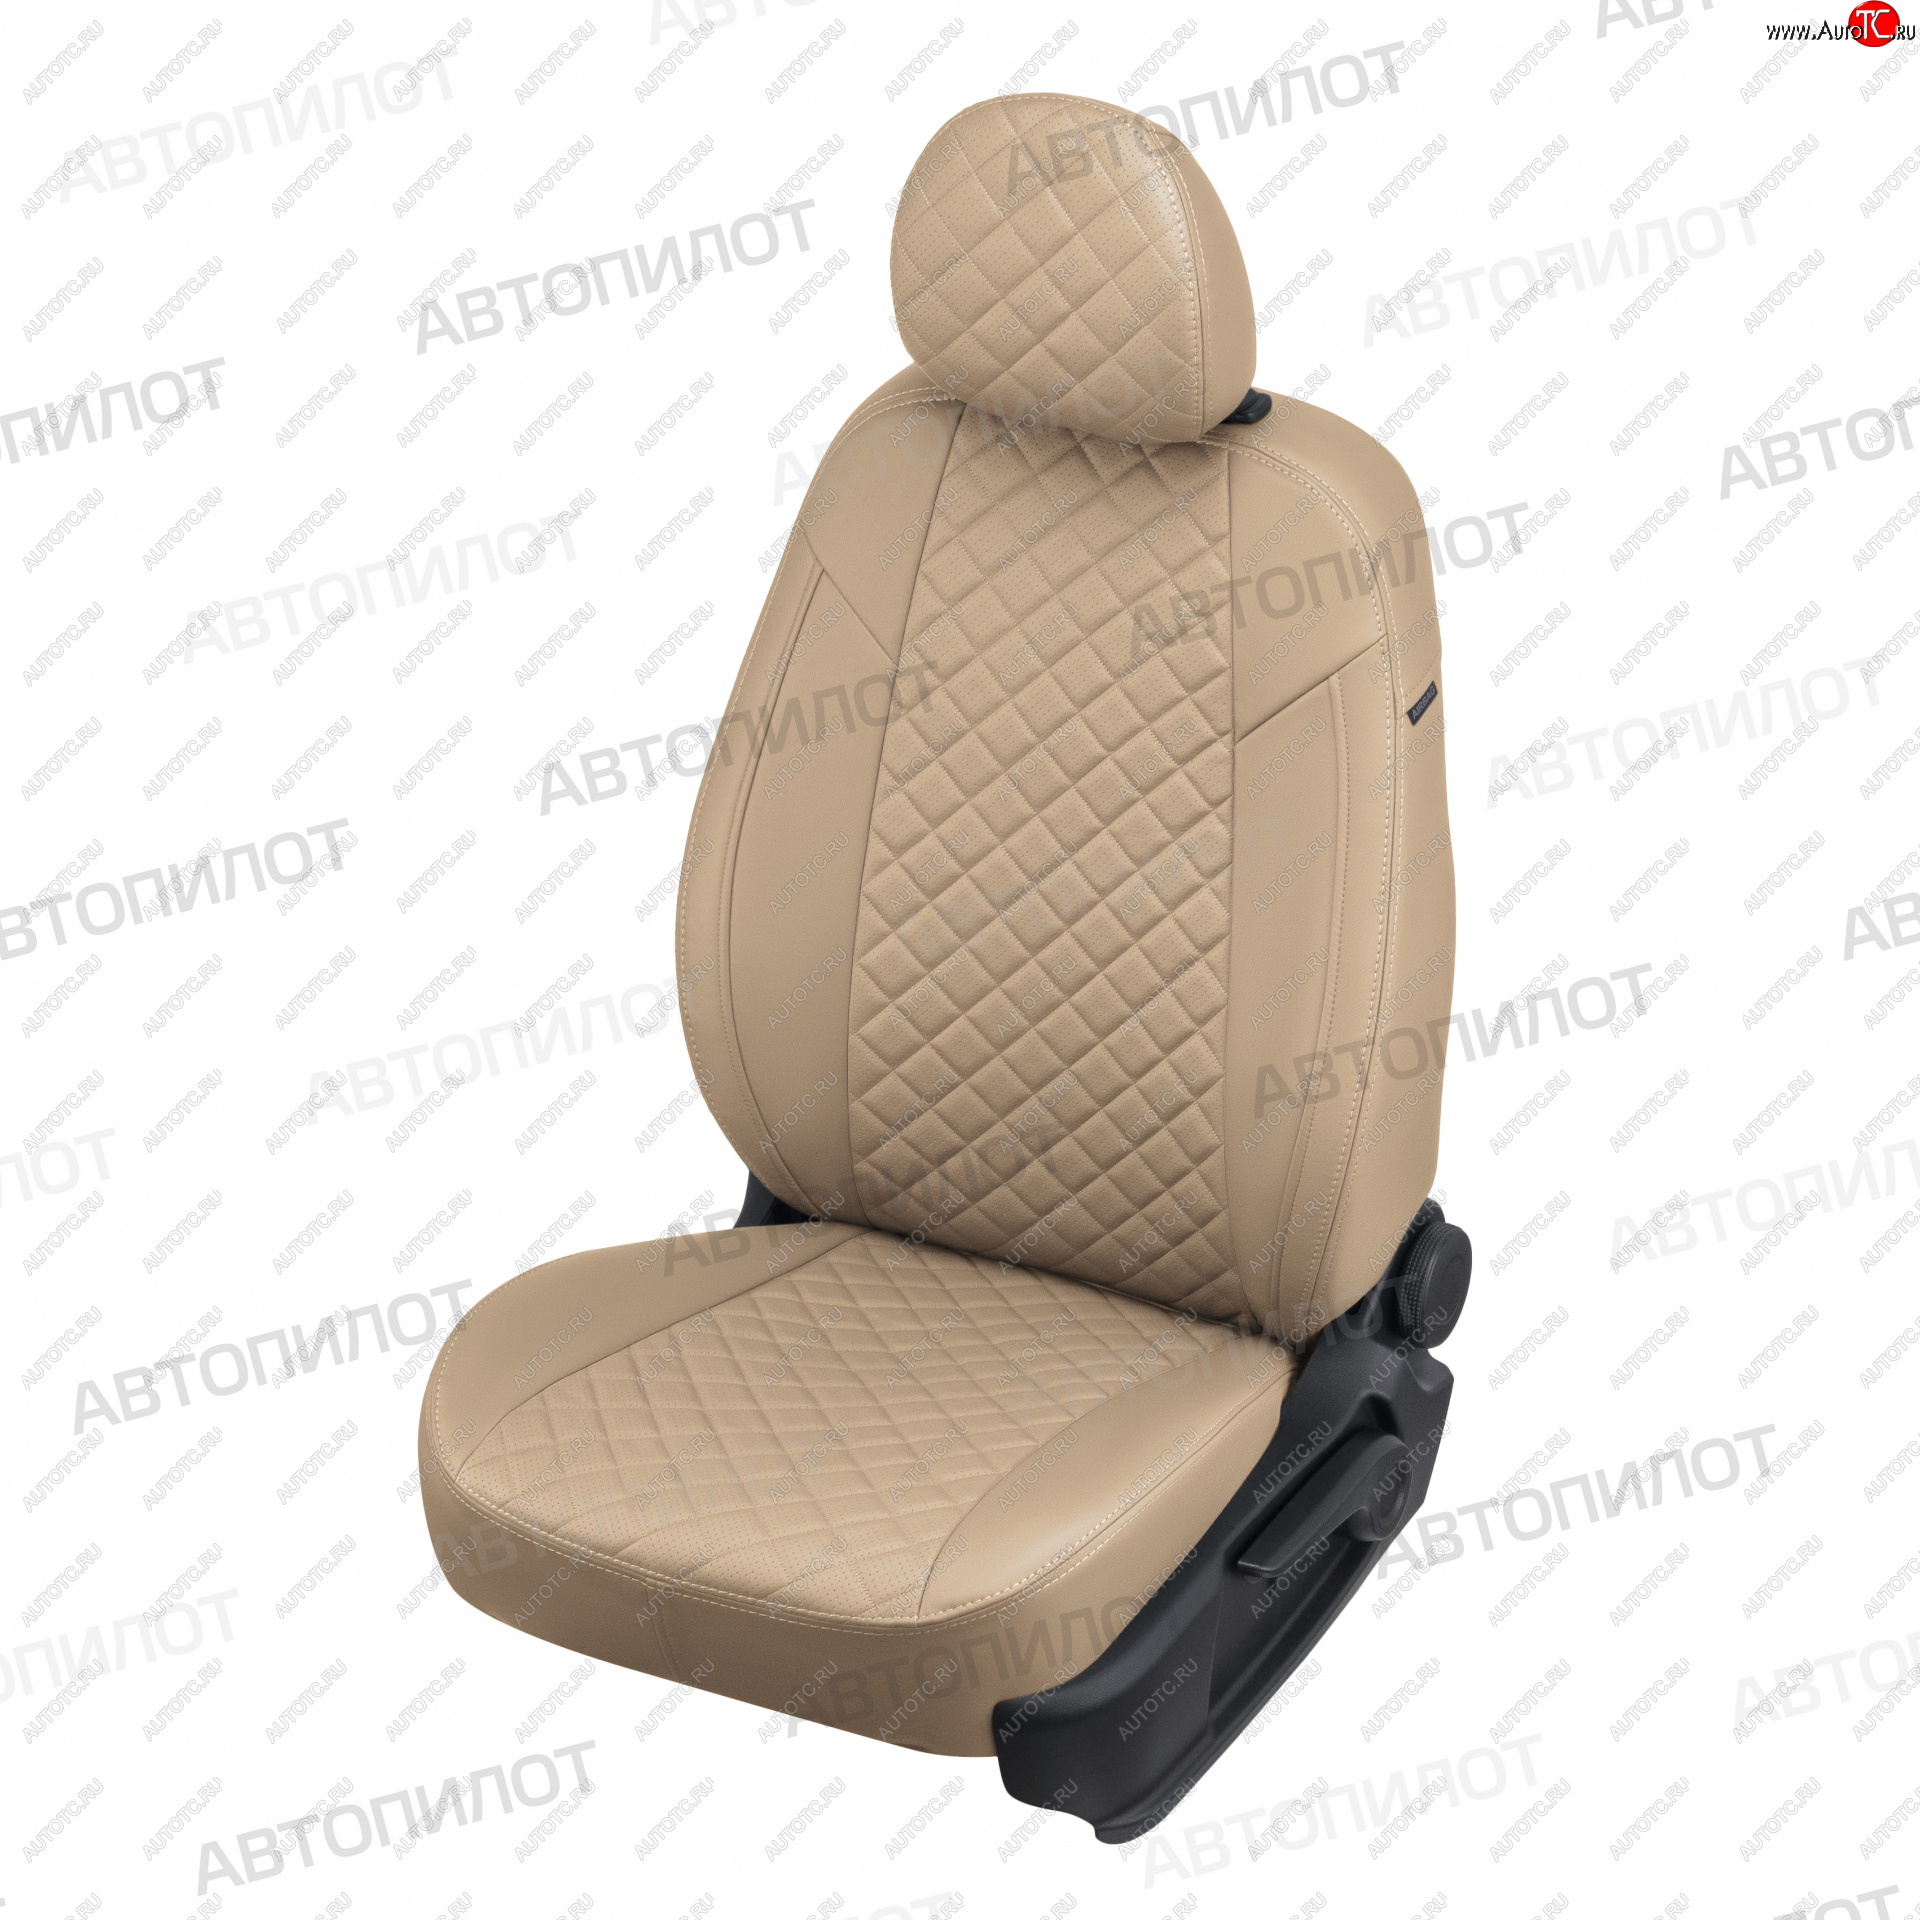 13 999 р. Чехлы сидений (экокожа, S-Line) Автопилот Ромб  Audi Q5  8R (2008-2017) (темно-бежевый)